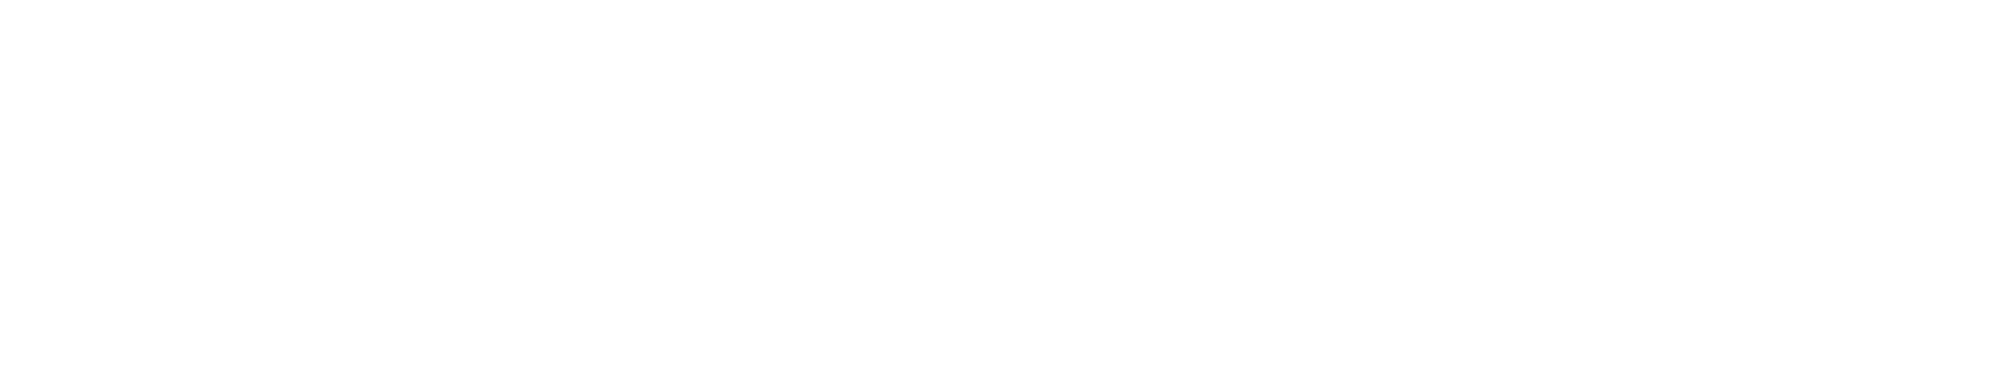 Fire & Flower Holdings Corp logo